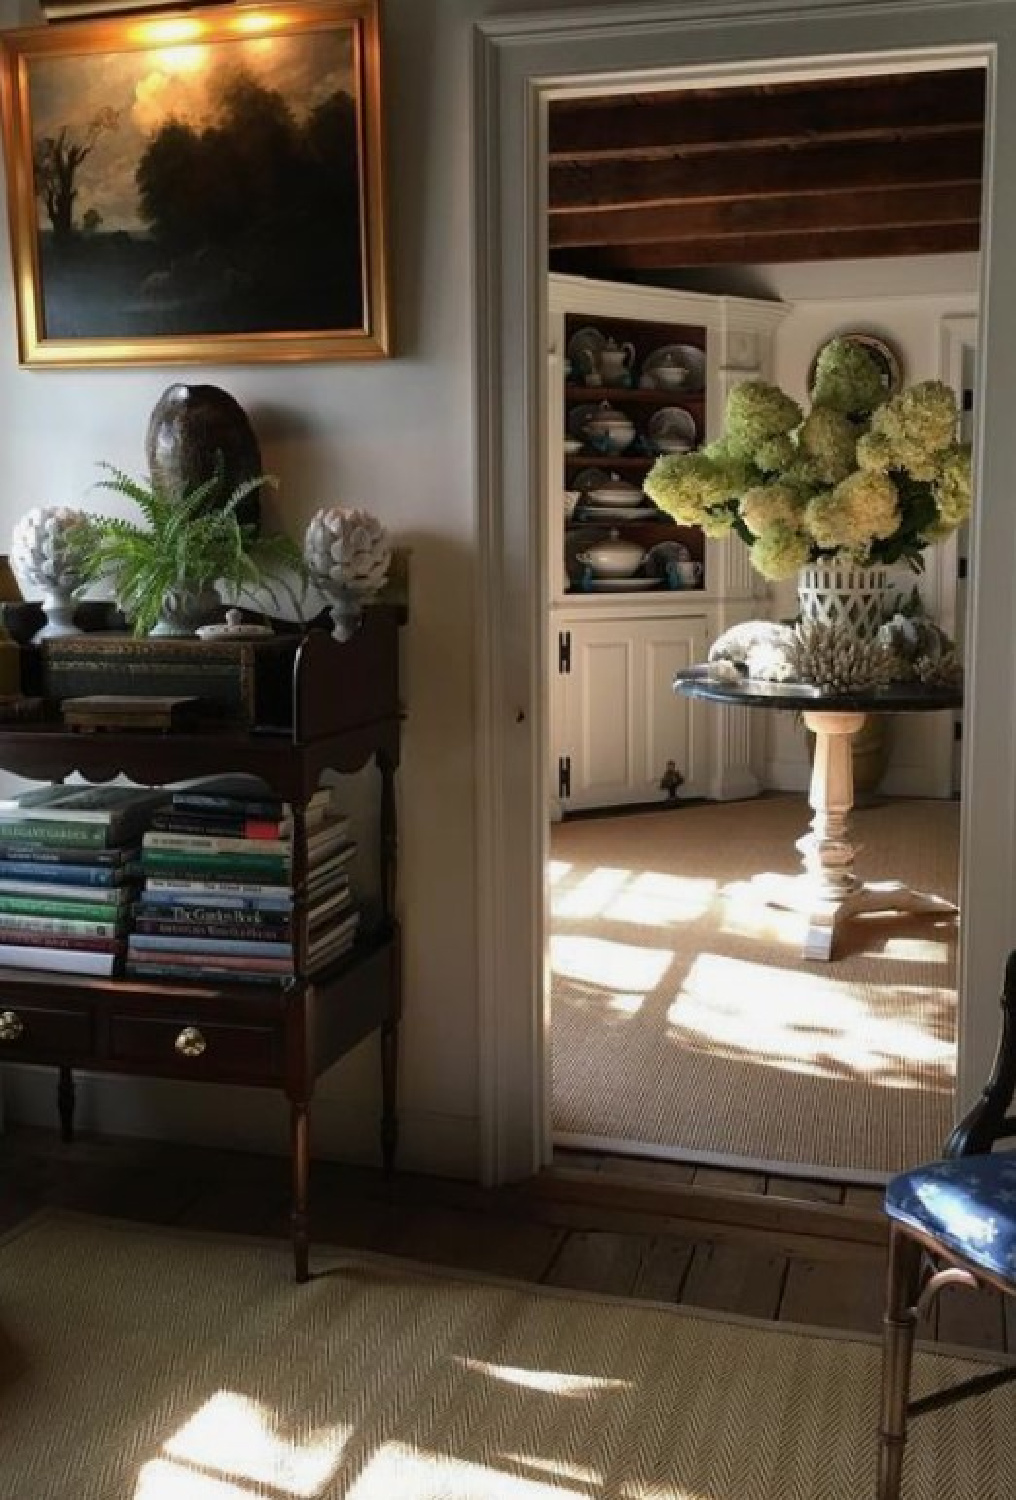 Elsa Billgren - European cottage style in a cozy vintage interior with hydrangea on table. #europeancottage #warmcozyinteriors #rusticelegance #europeancountry